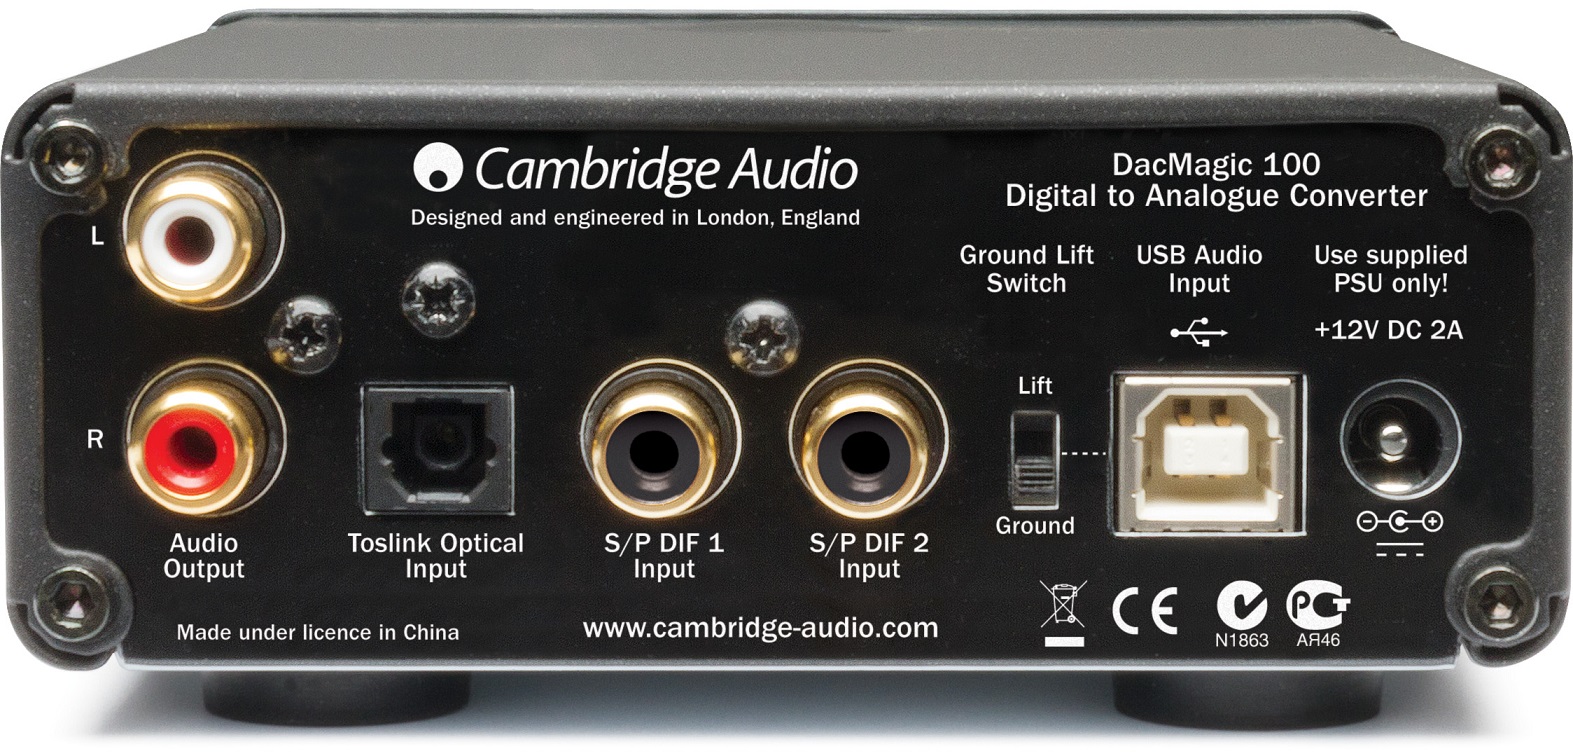 9010 Cambridge Audio DAC MAGIC 100 Back Rear Connections Kosmashifi Stoa Fexi 